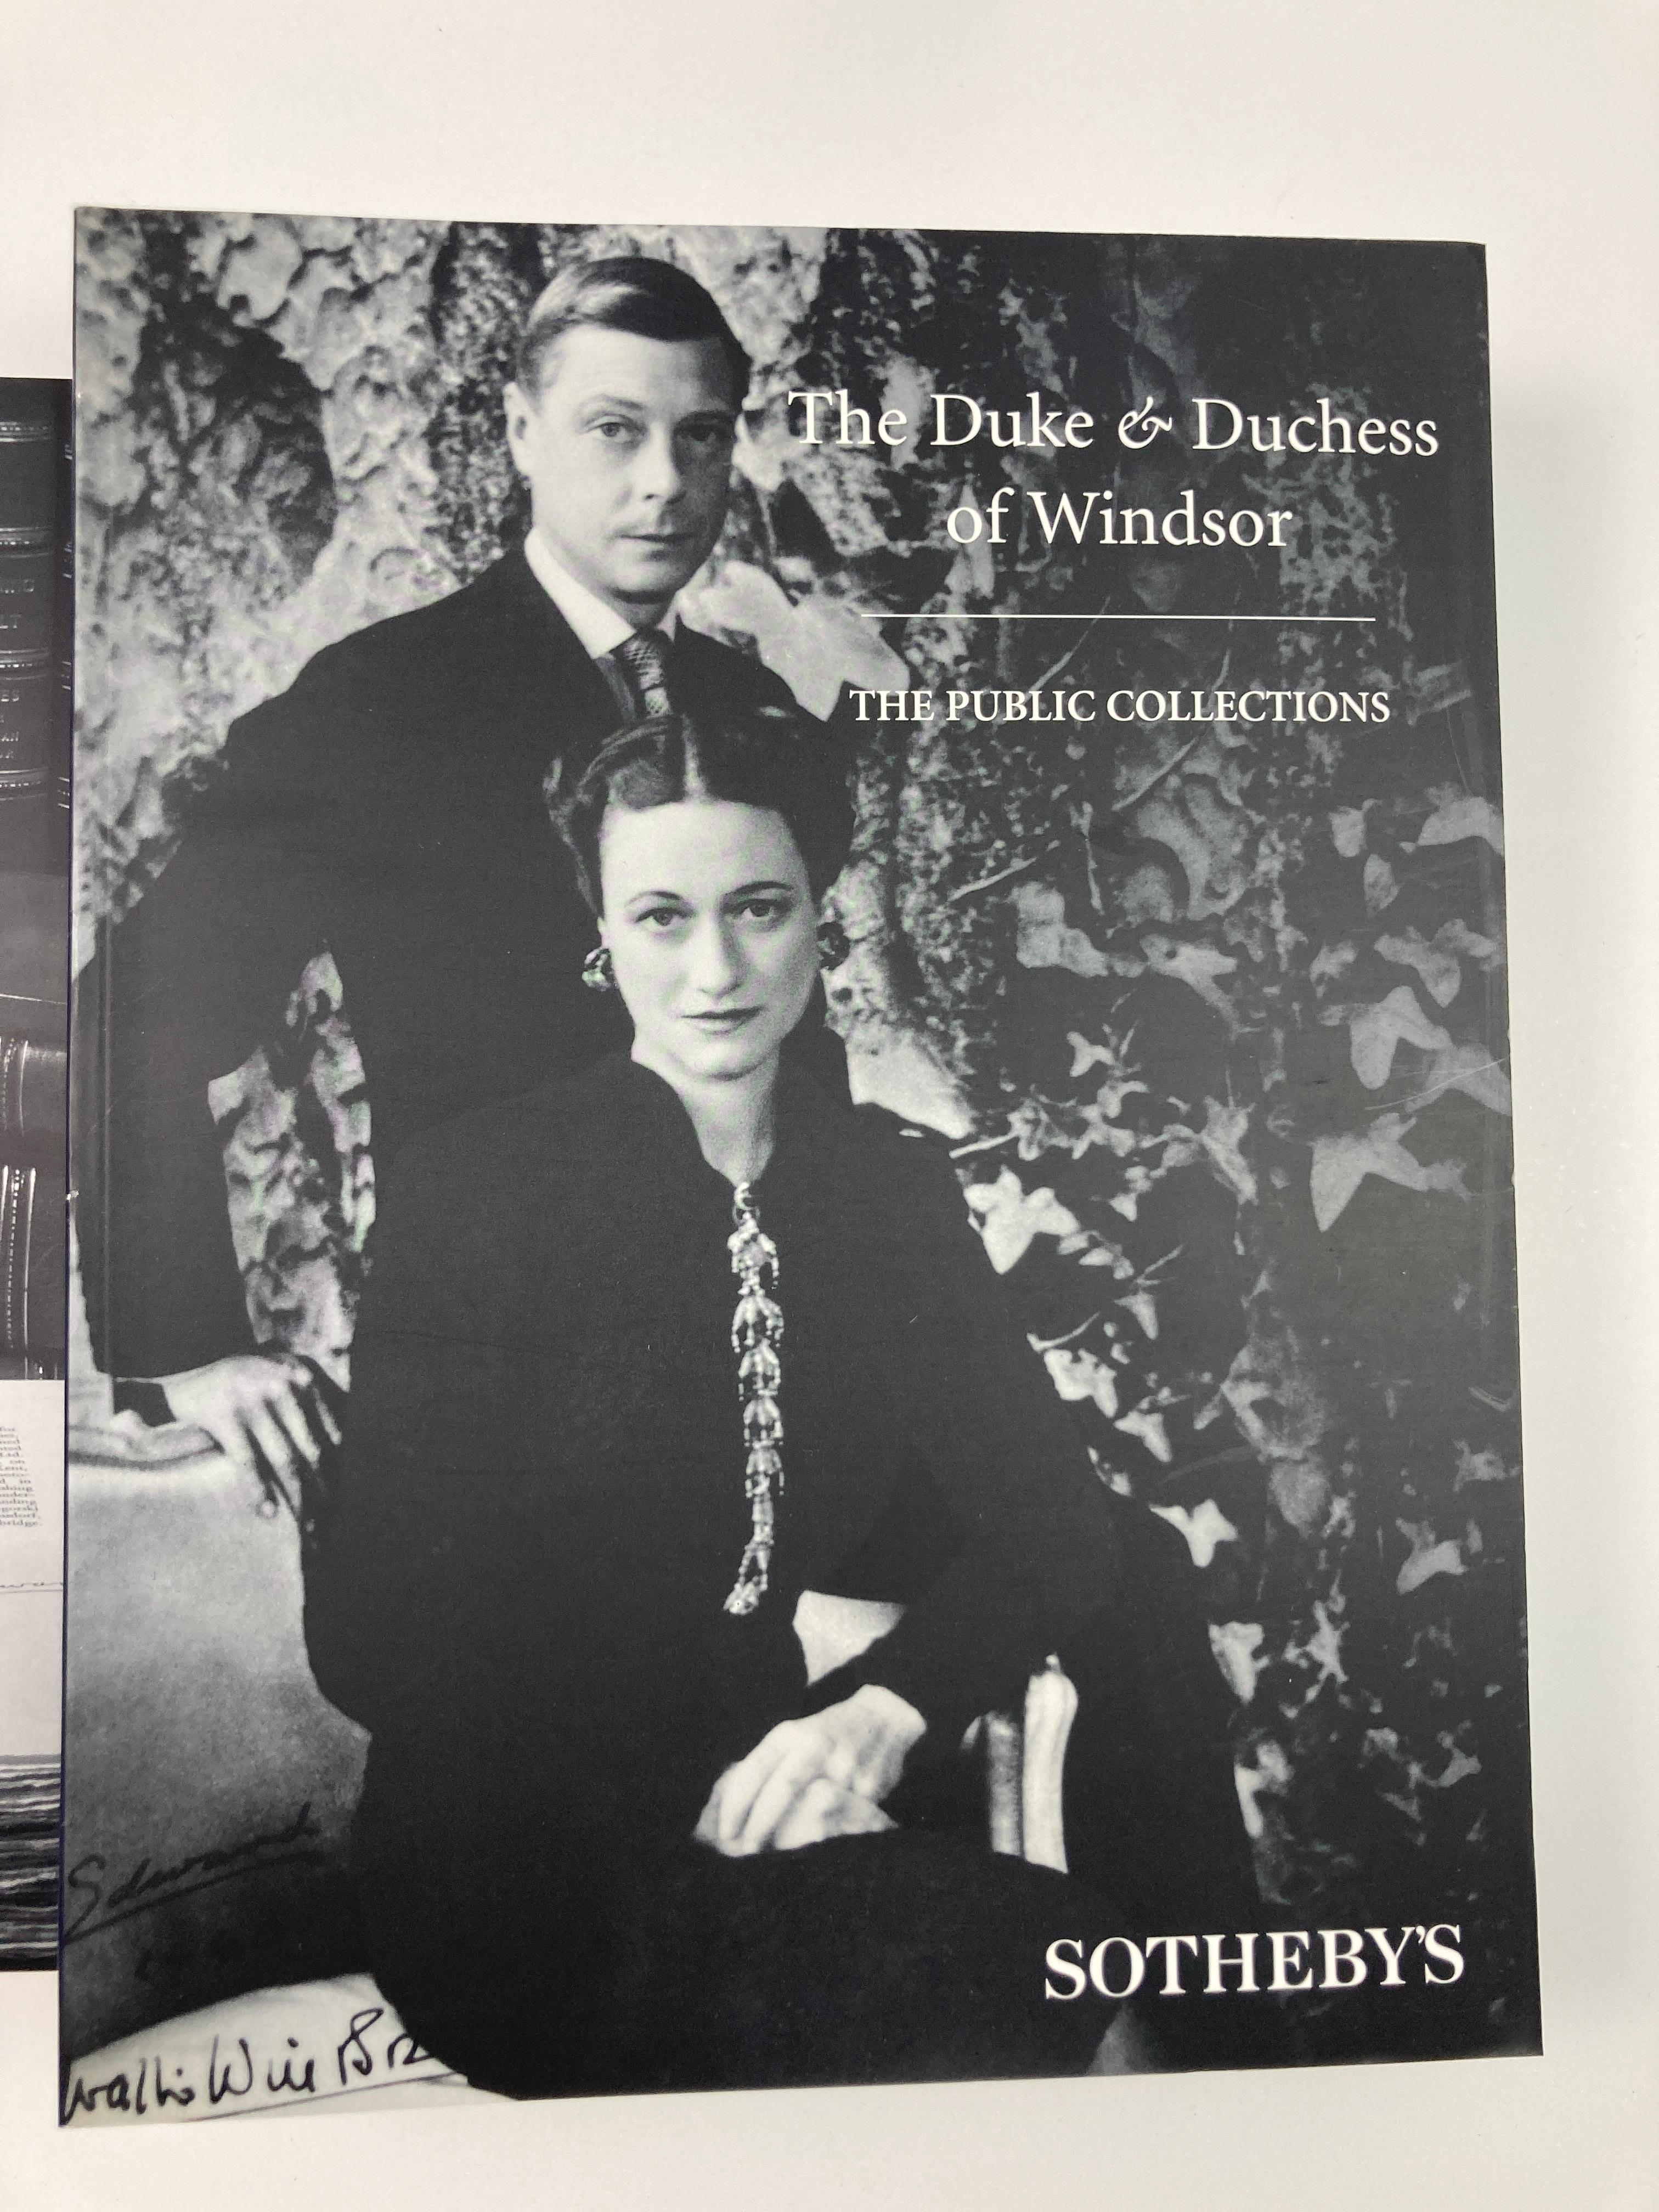 The Duke and Duchess of Windsor Auction Sothebys Books Catalogs in Slipcase Box 6